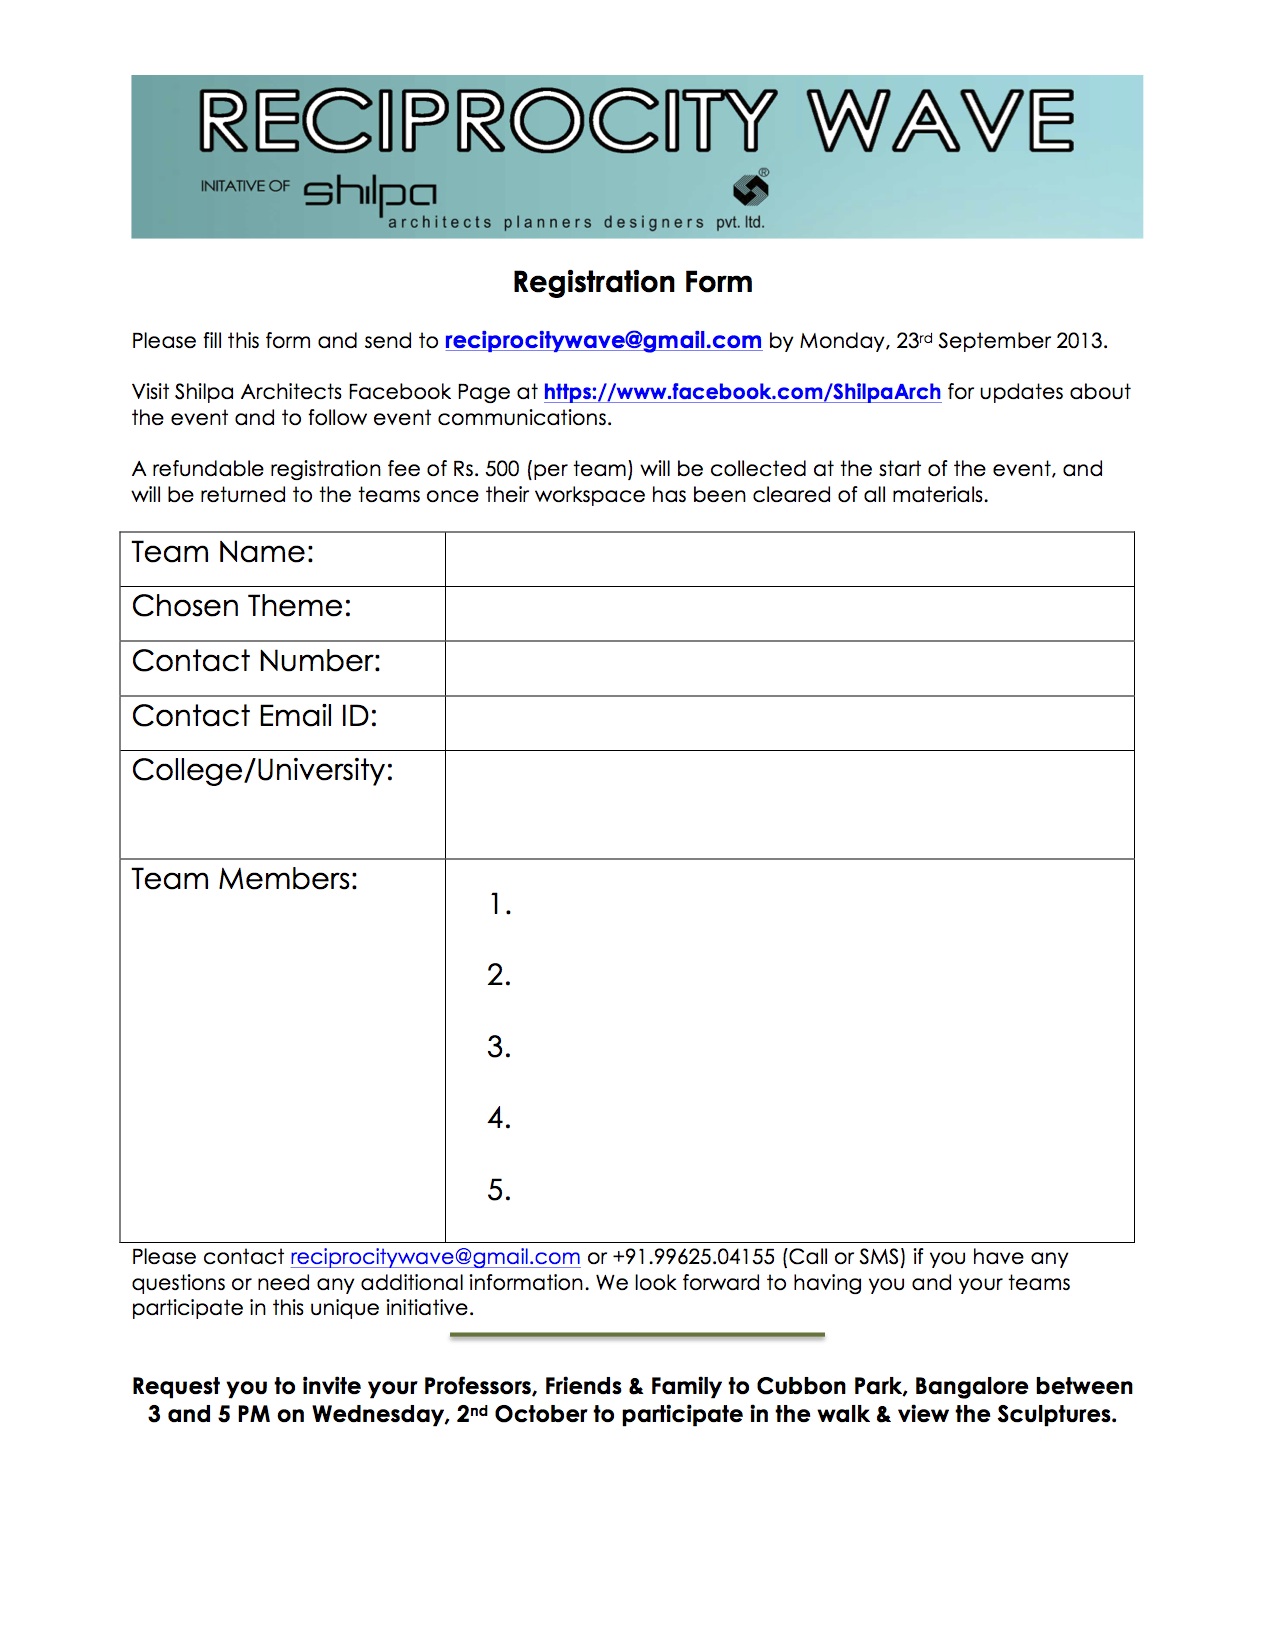 Reciprocity Wave Bangalore - Registration Forms